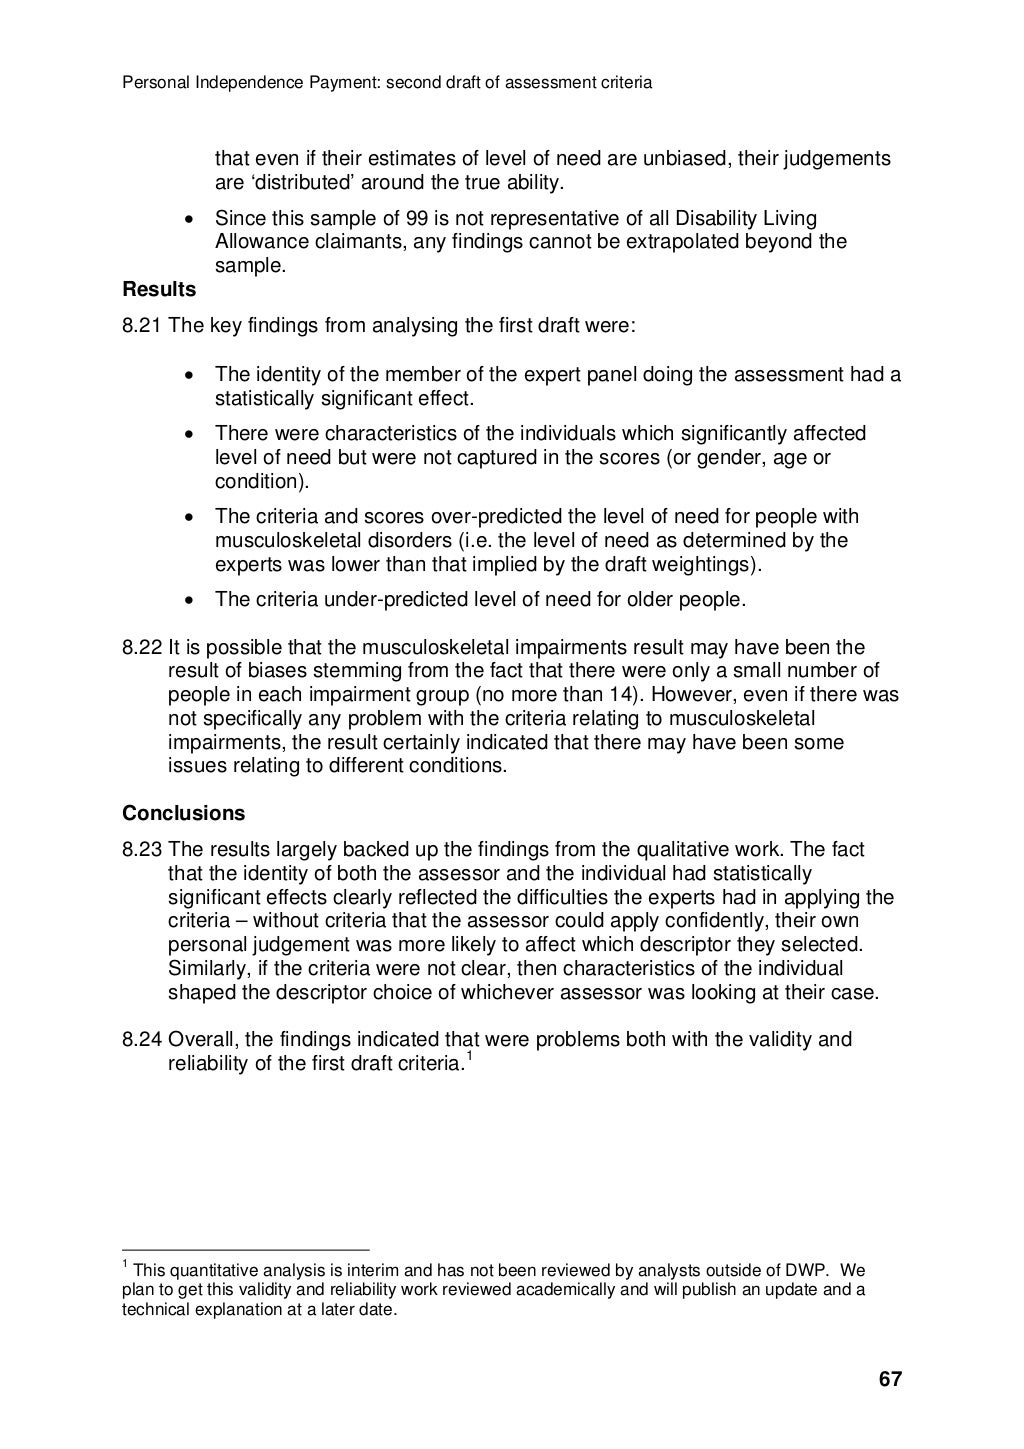 PIP second draft assessment criteria (explanatory note)